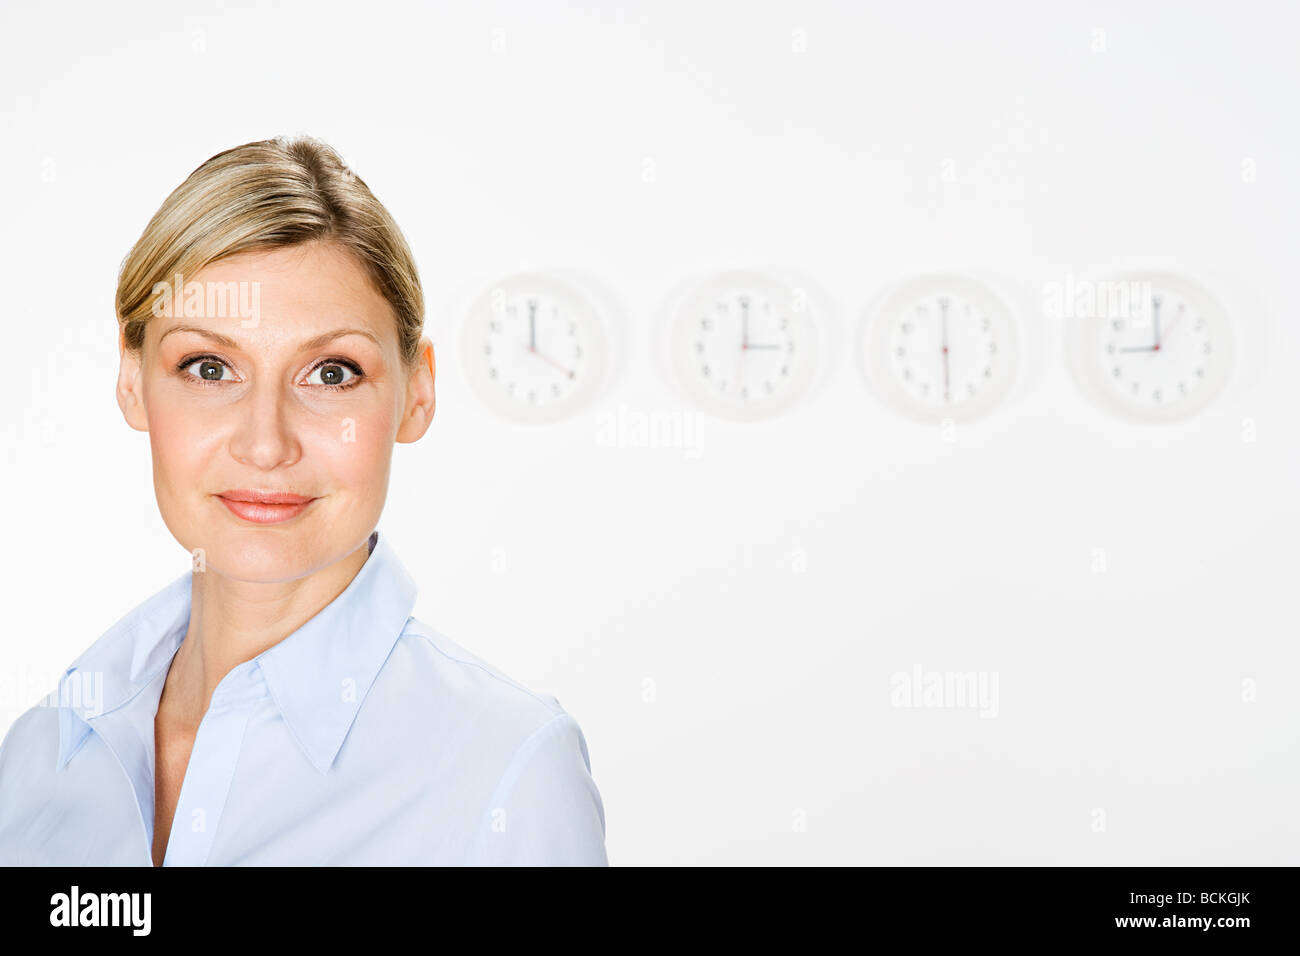 Businesswoman and clocks Stock Photo